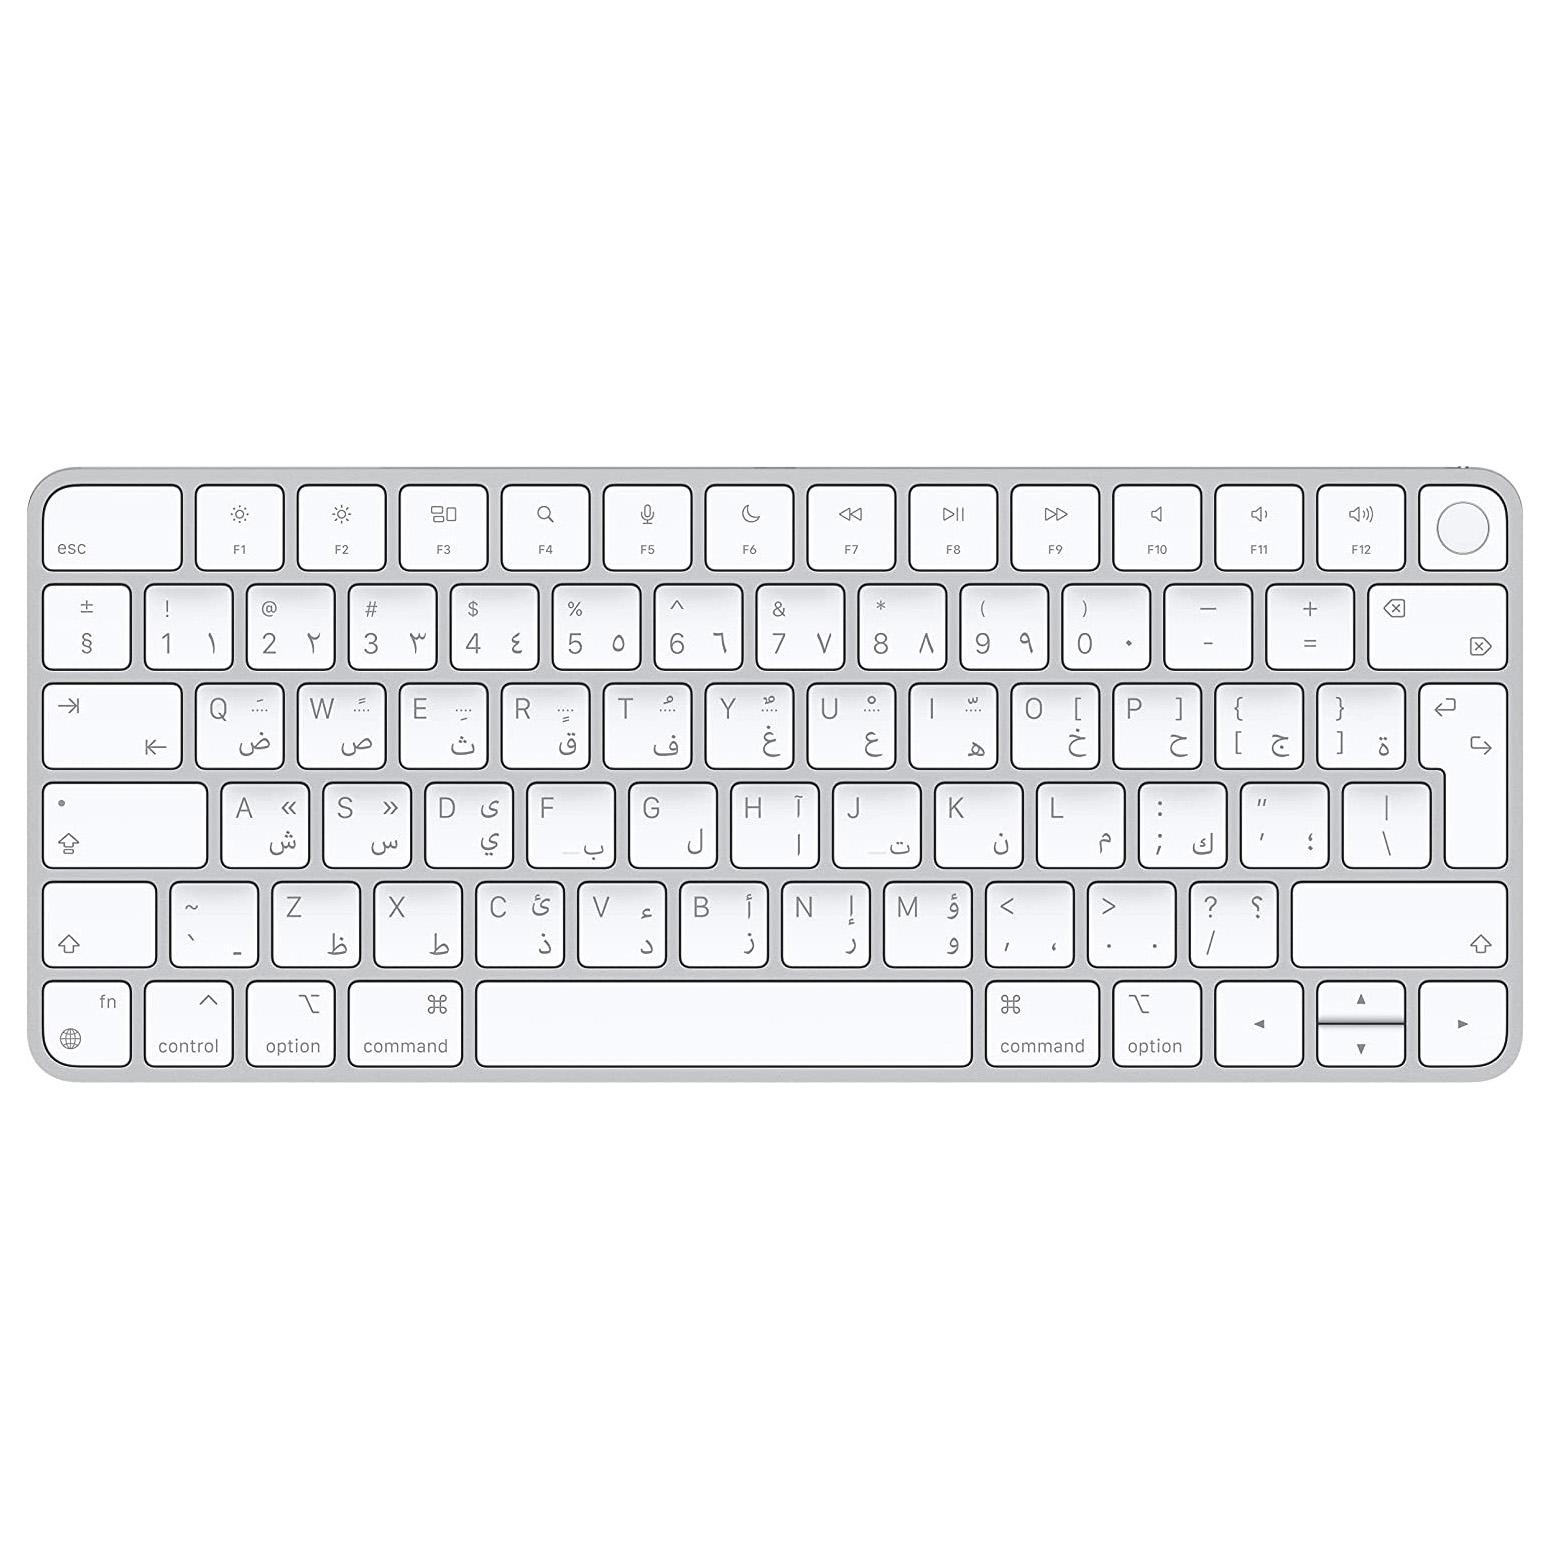 Клавиатура беспроводная Apple Magic Keyboard 3 с Touch ID, Arabic, белые клавиши